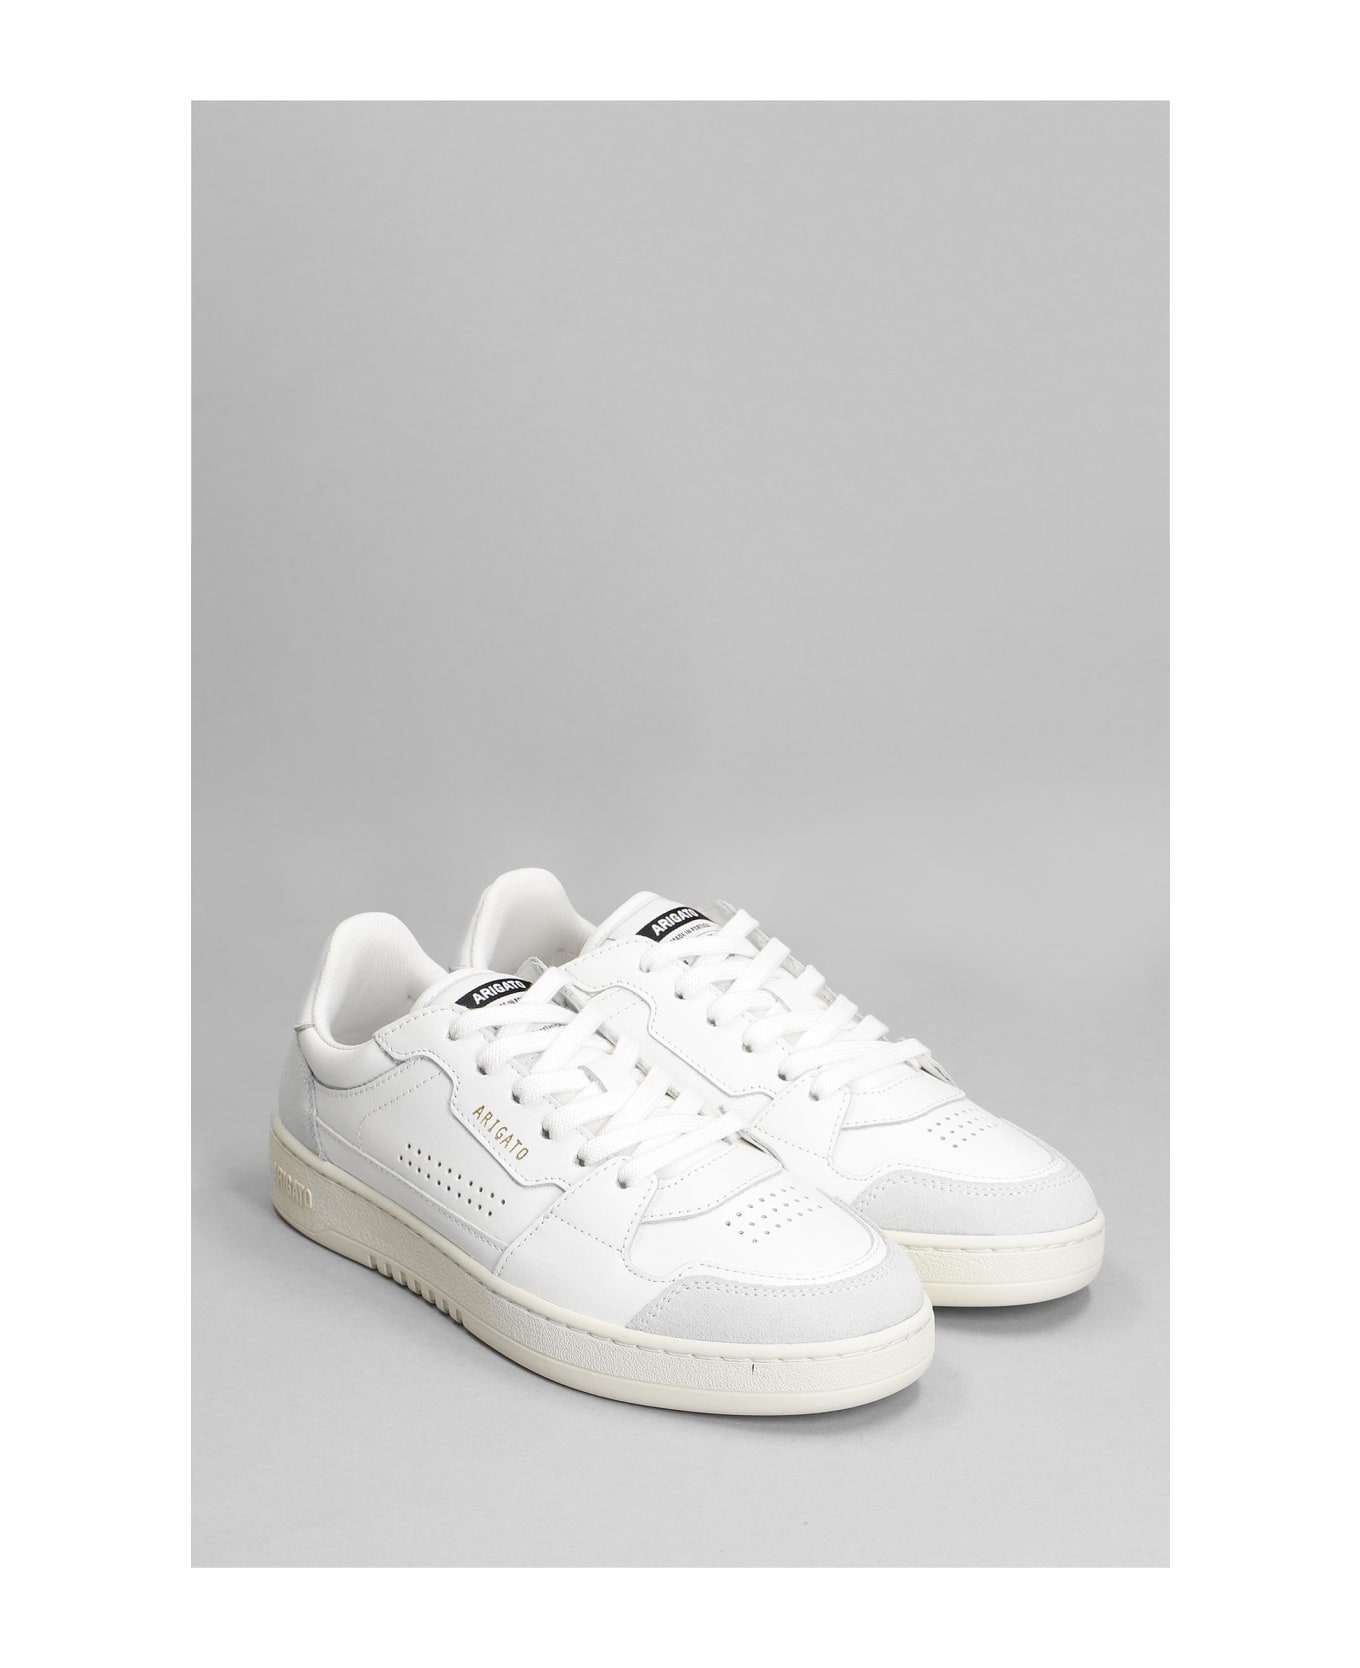 Axel Arigato Dice Lo Sneakers In White Leather - white